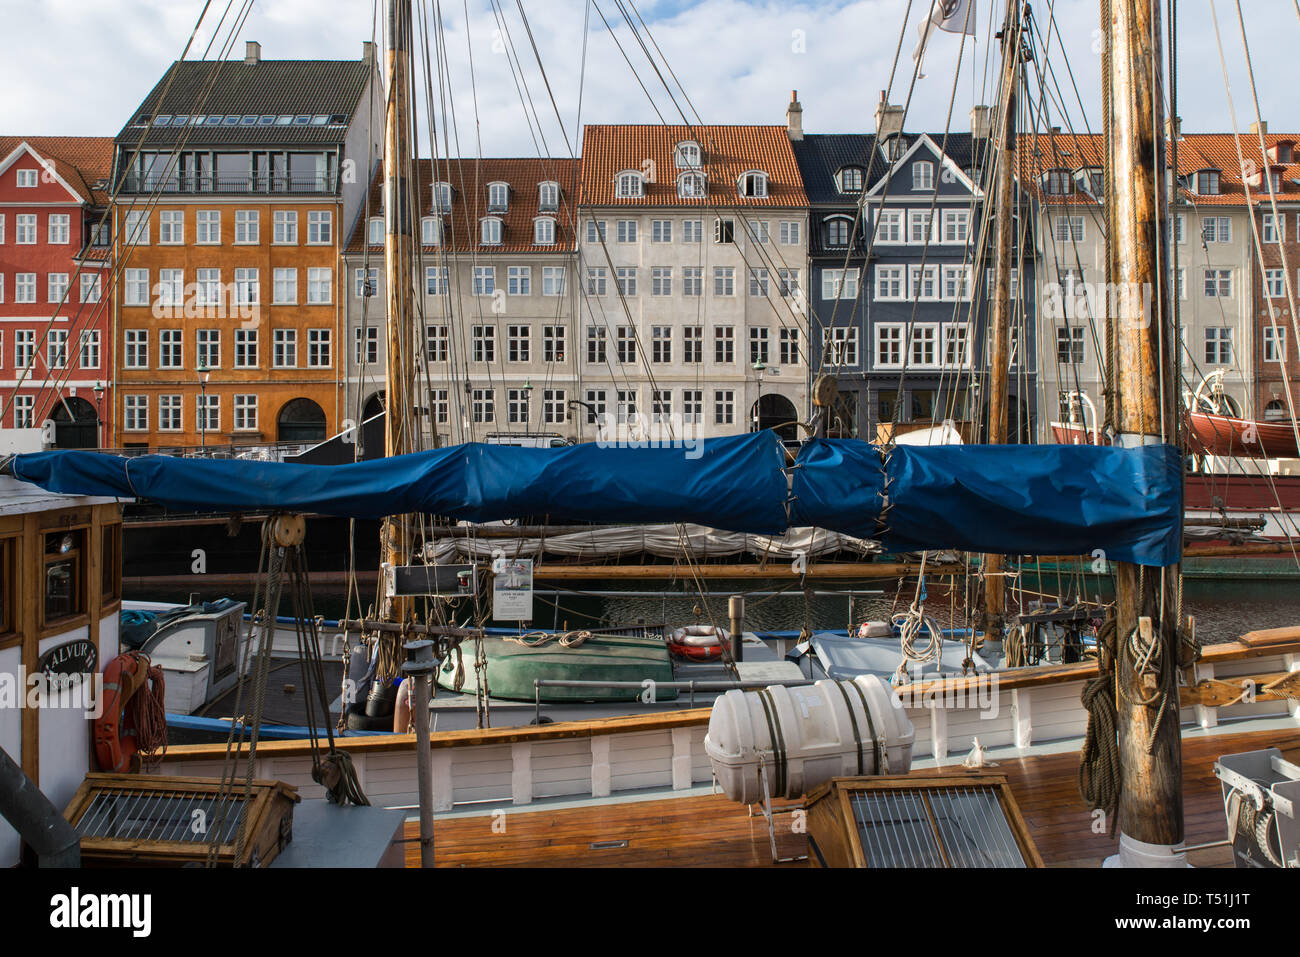 Sailing boats in Nyhavn, the 17th century waterfront in Copenhagen, Denmark. Stock Photo